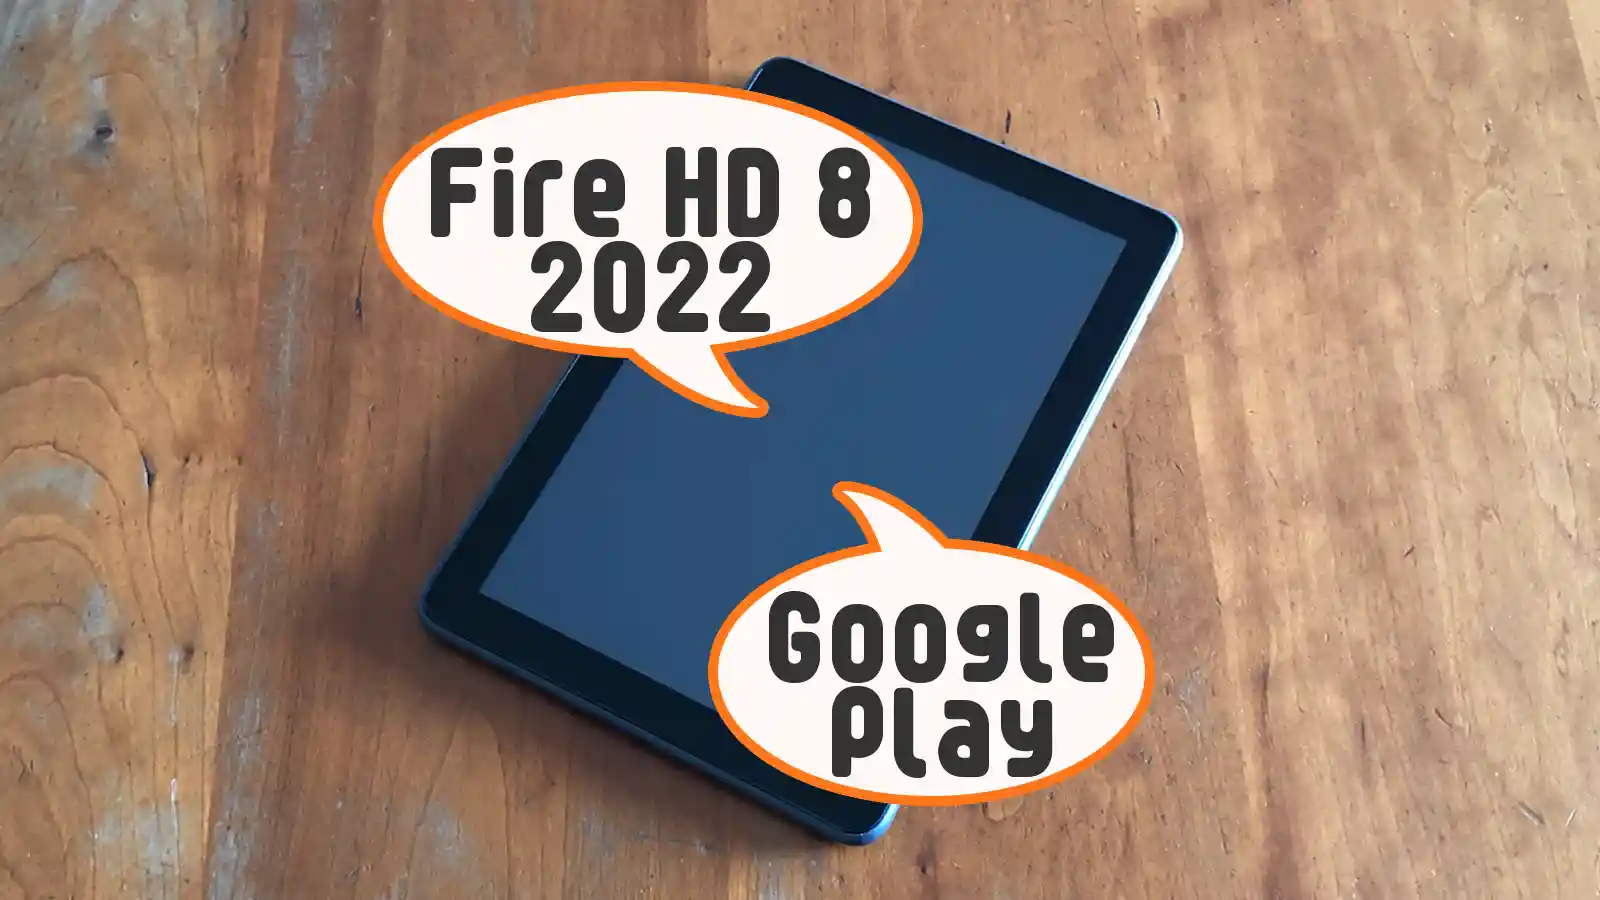 Amazon Fireタブレット Fire HD 8 2022年モデル Google Play インストール